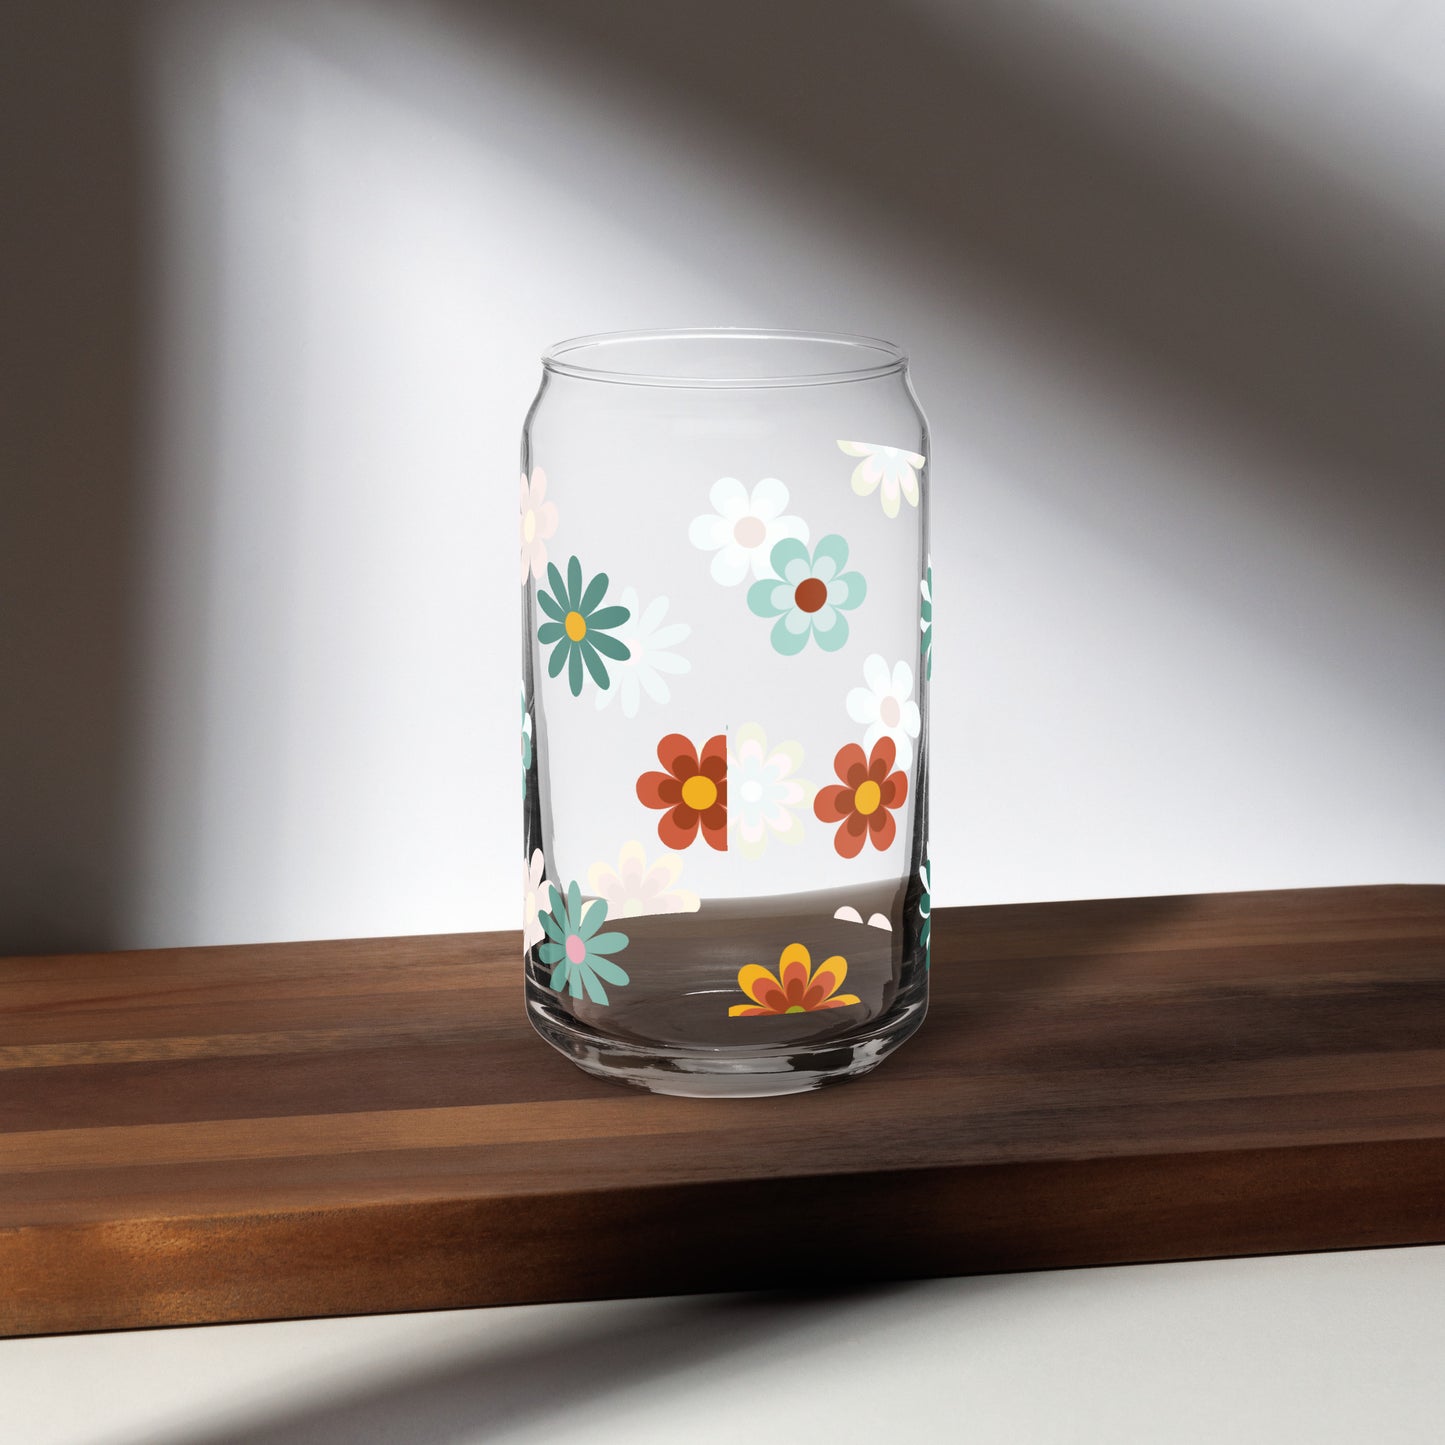 Retro FlowersCan-shaped glass